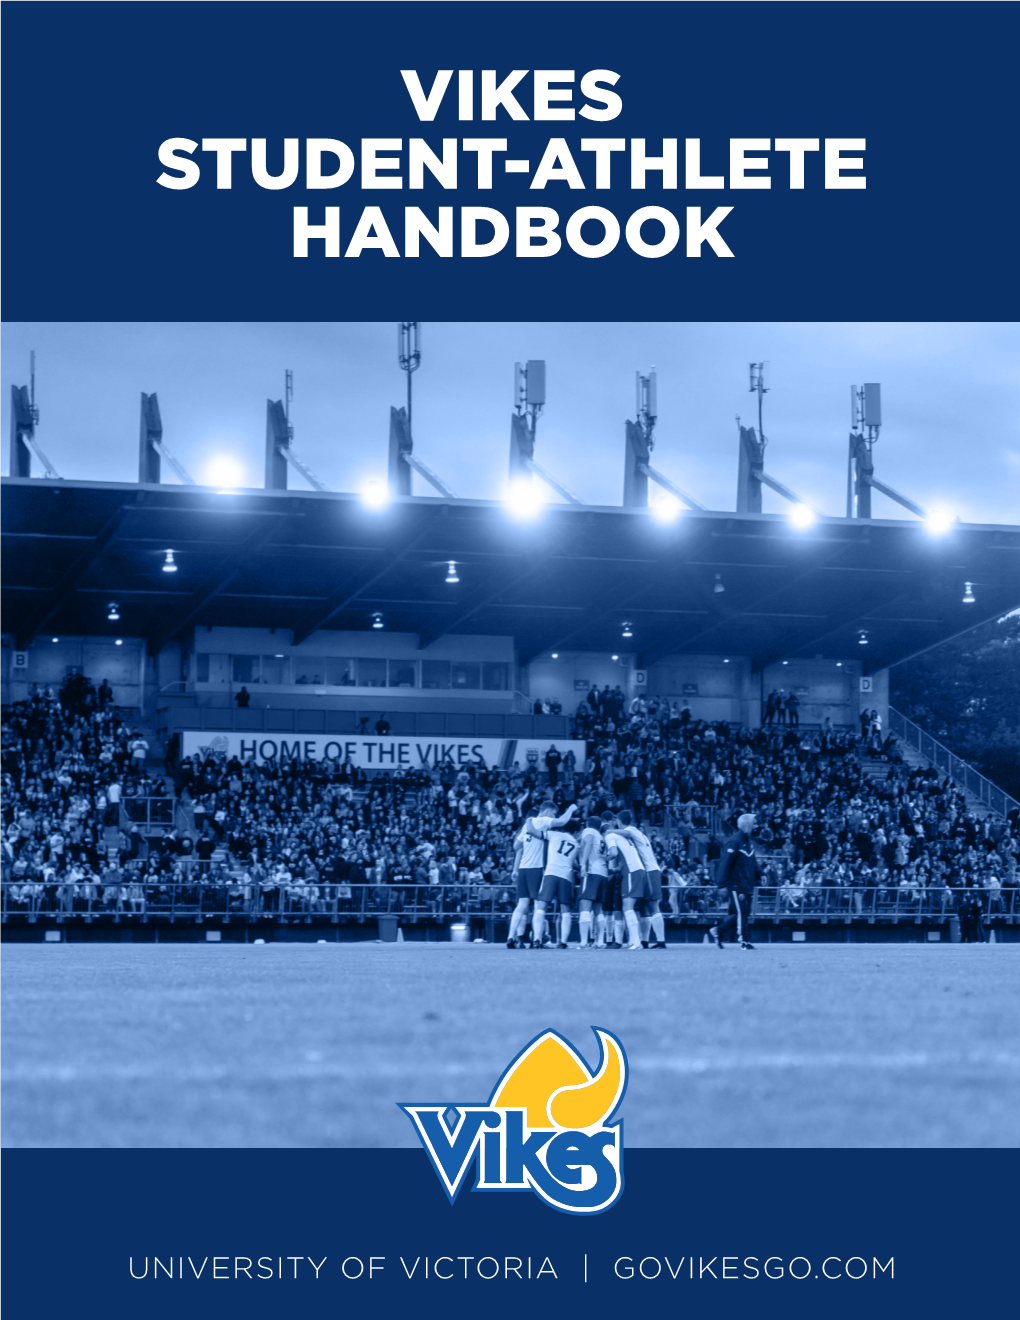 Vikes Student-Athlete Handbook